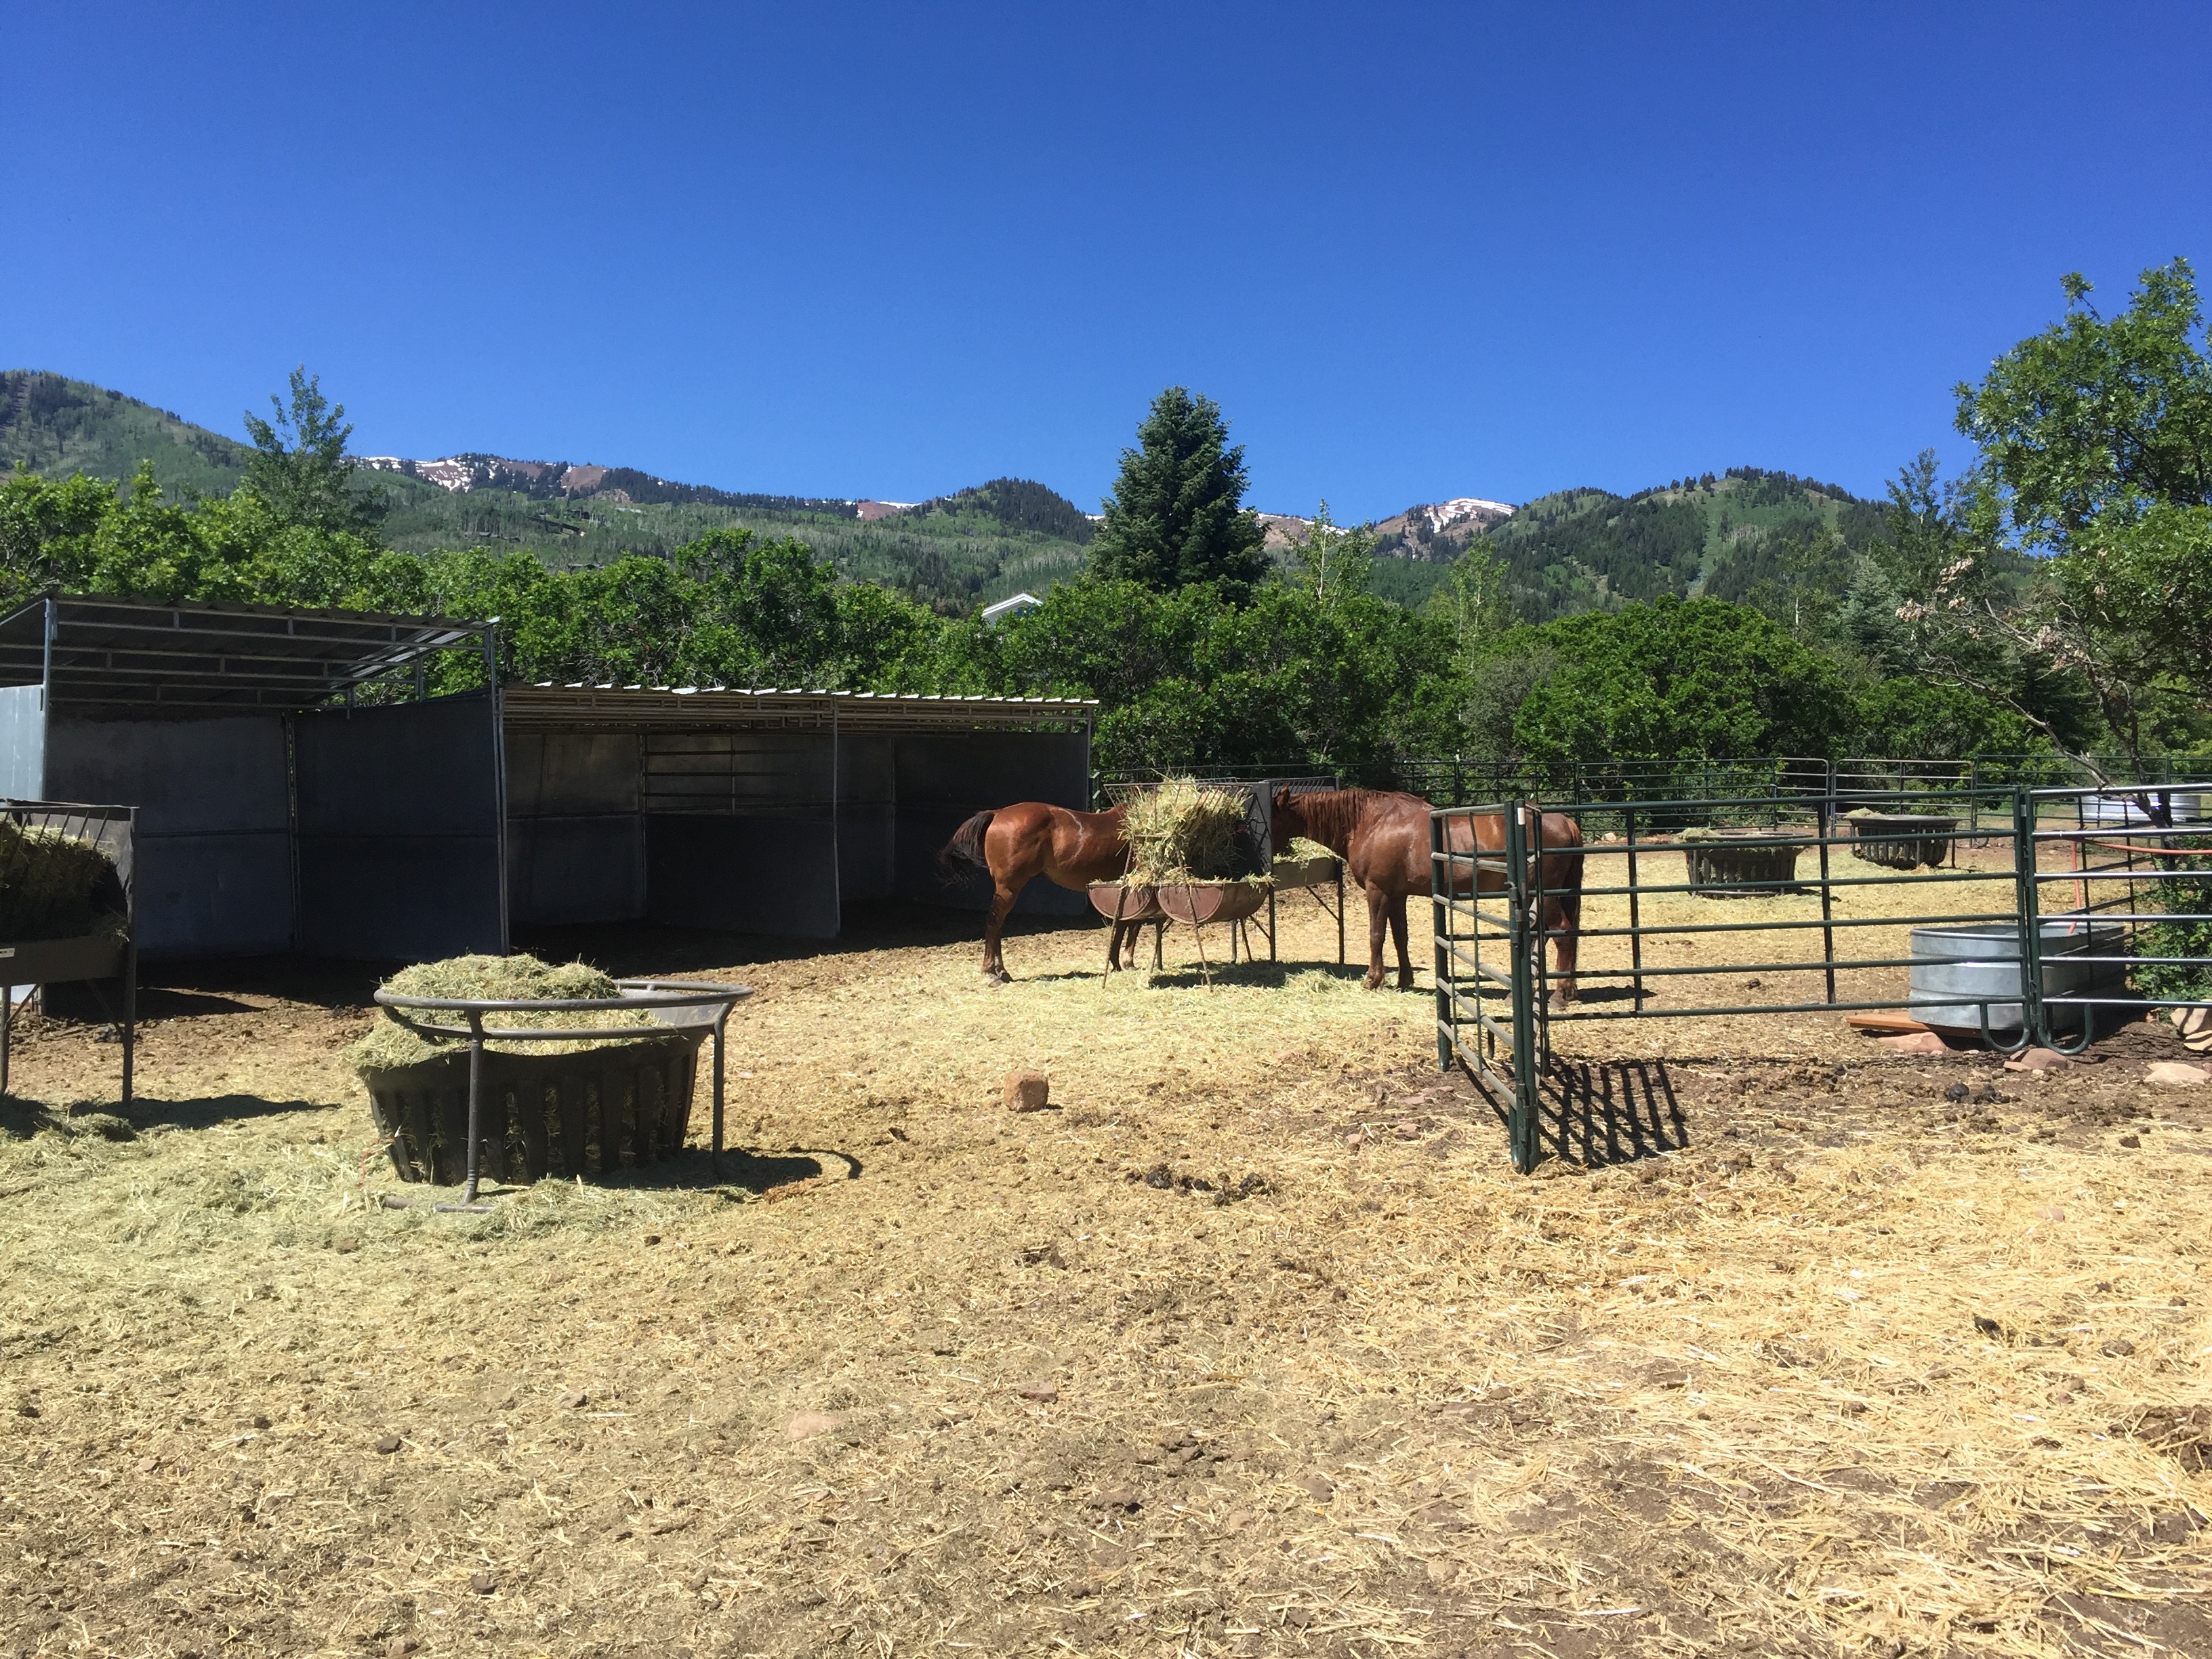 Horses by a barn at a ranch